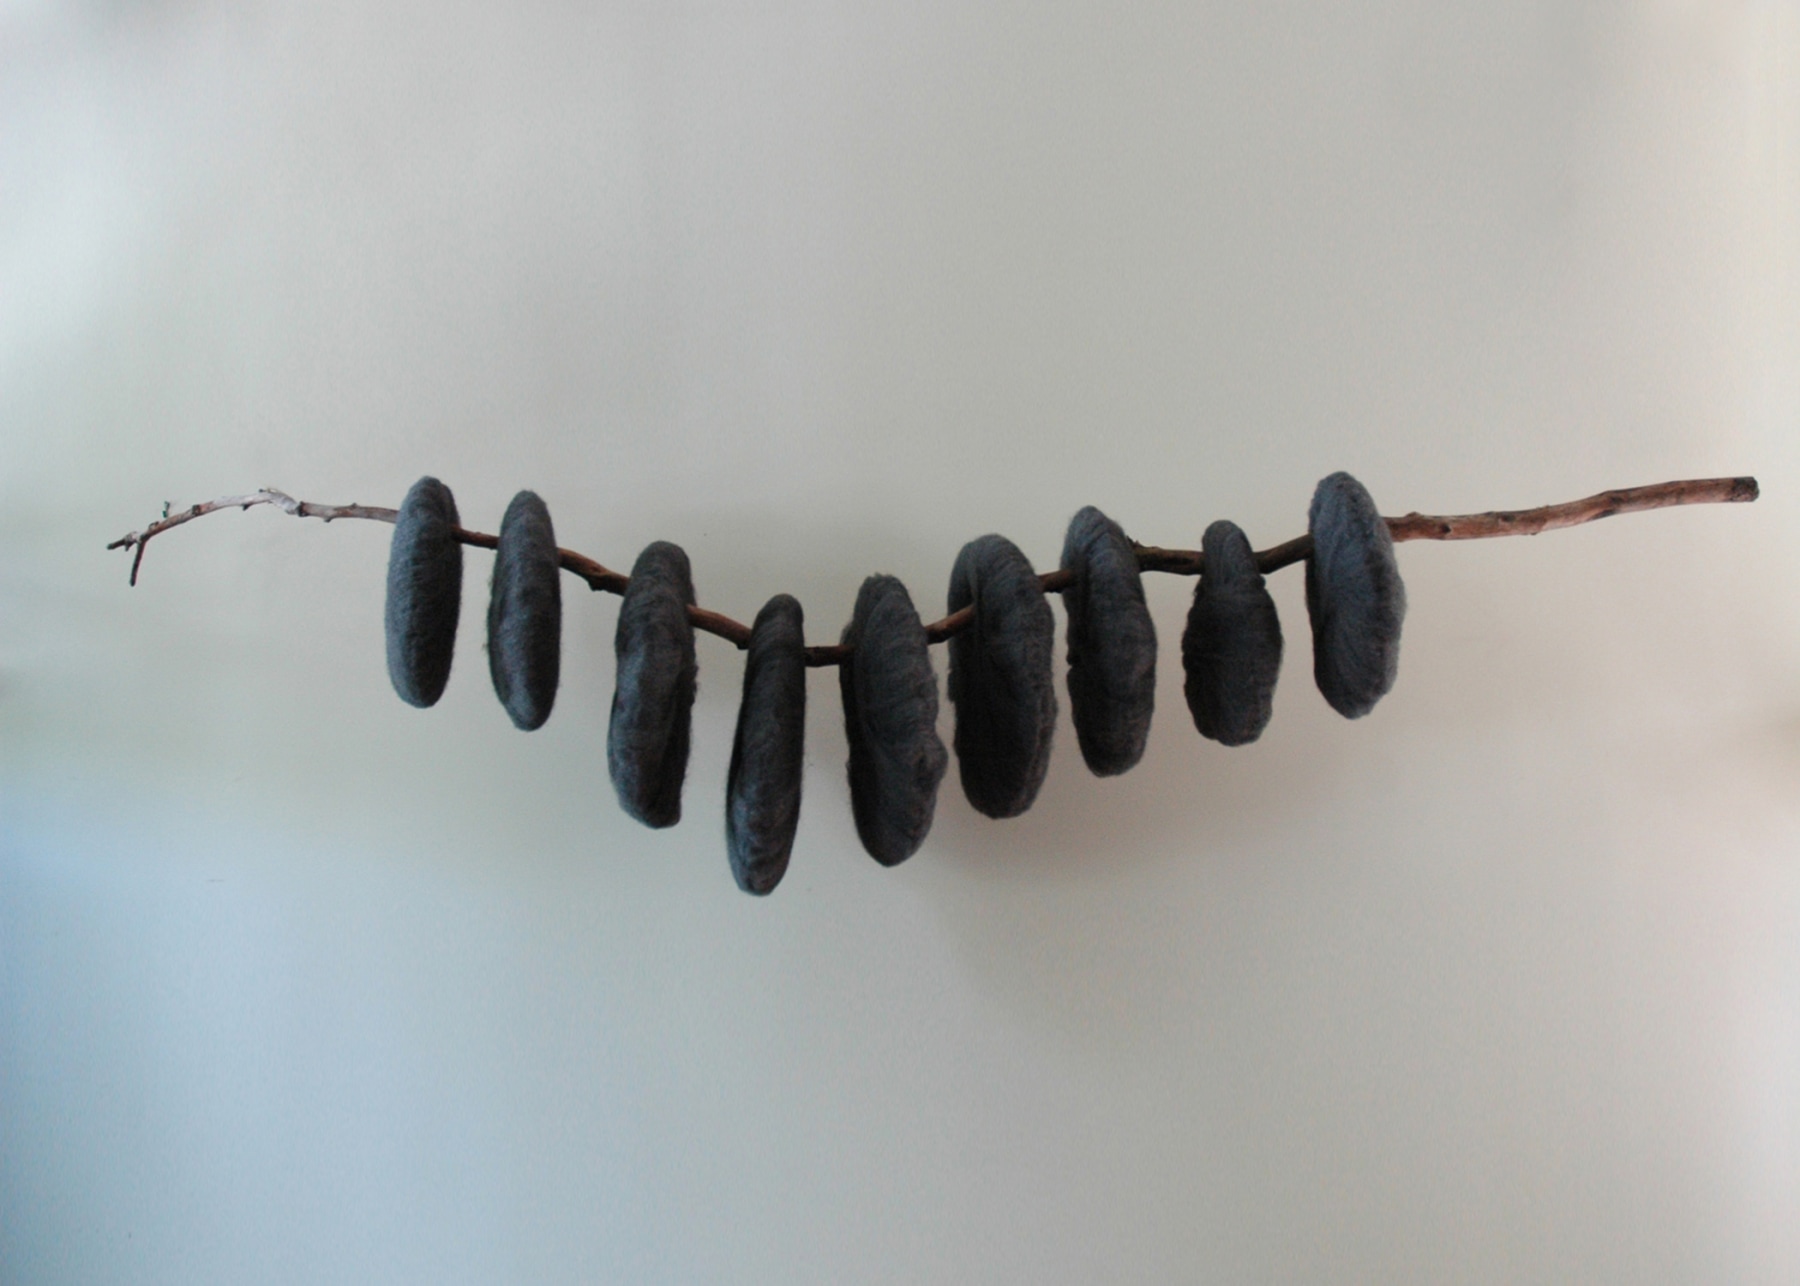 Molly Sawyer Steel Vertebrae, 2016/17 Steel wool, tree branch, wire Dimensions variable, sculpture